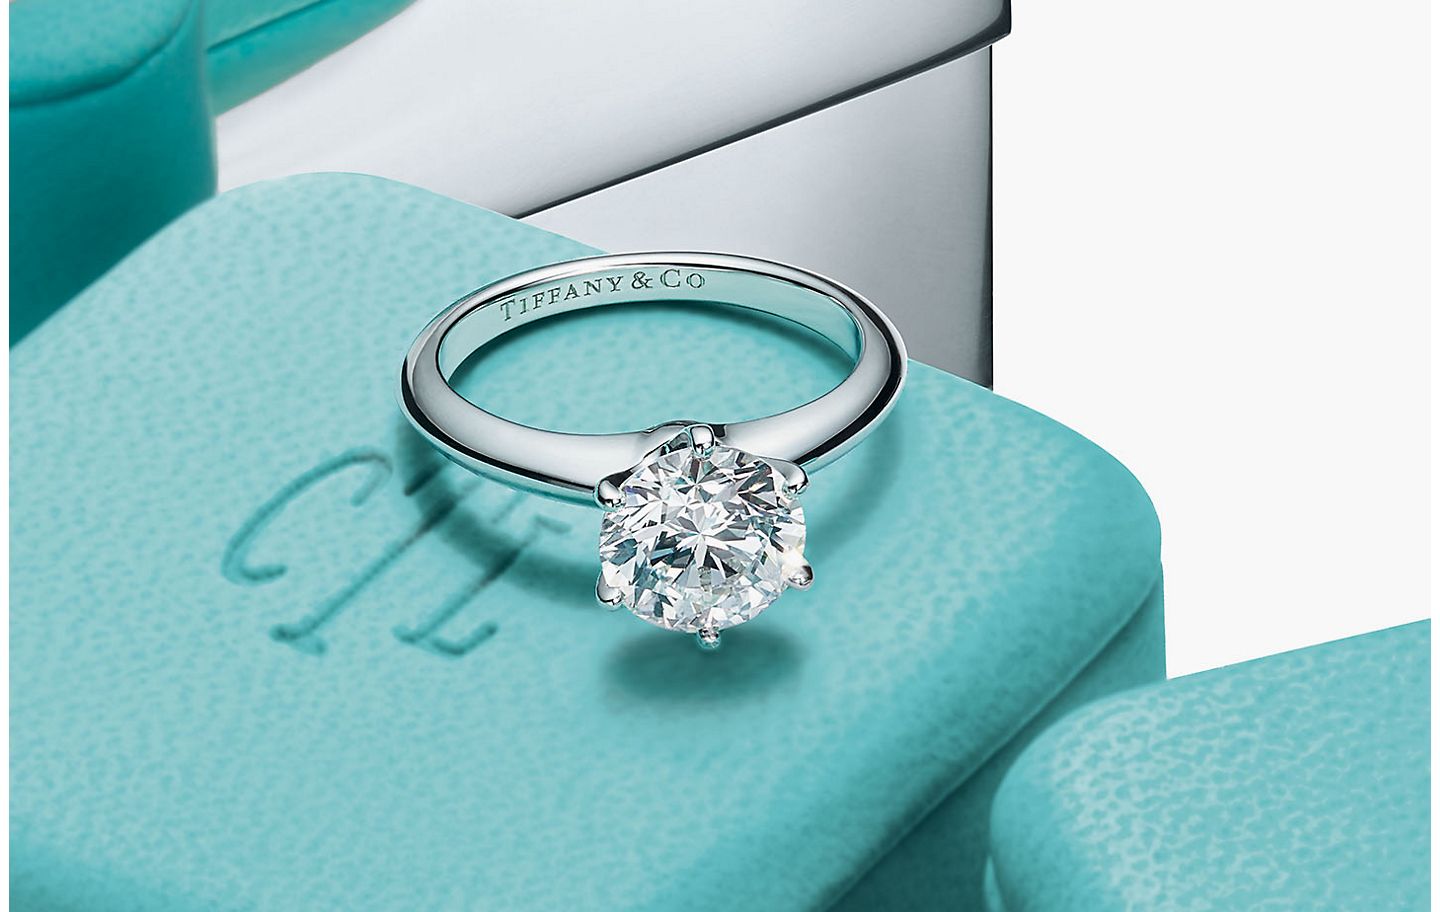 Tiffany bridal rings 50 cent bulletproof g unit edition psp